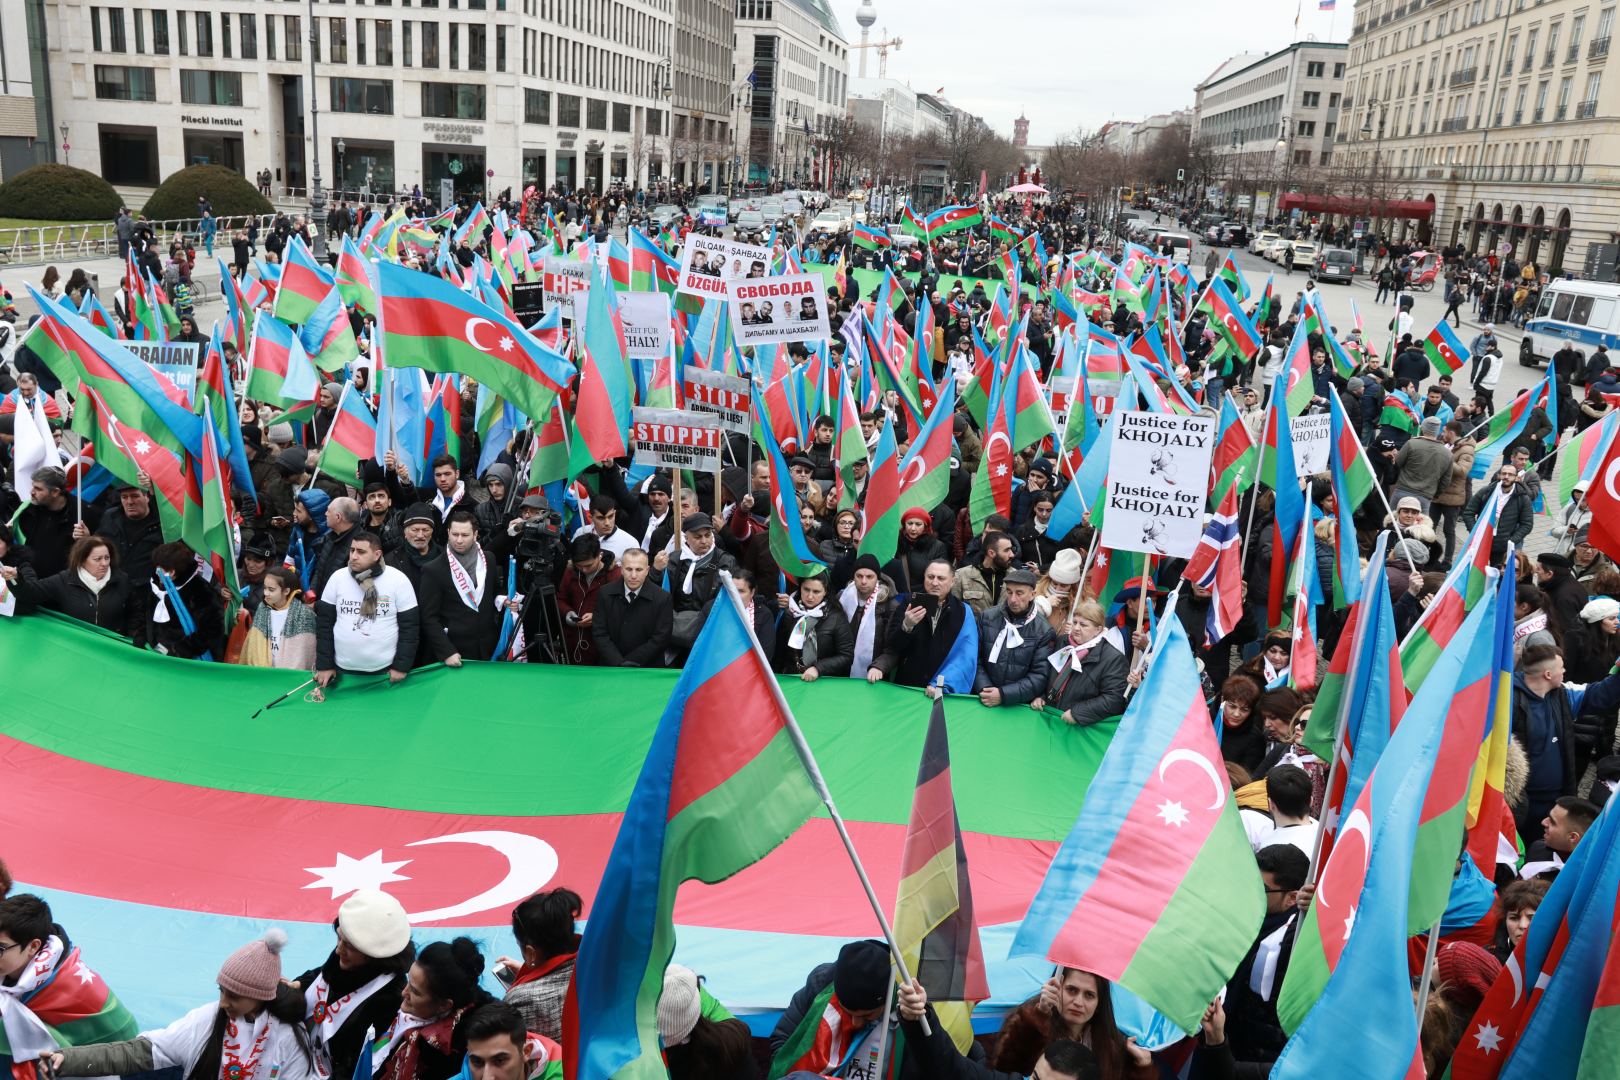 EU-wide Karabakh rally held in Berlin